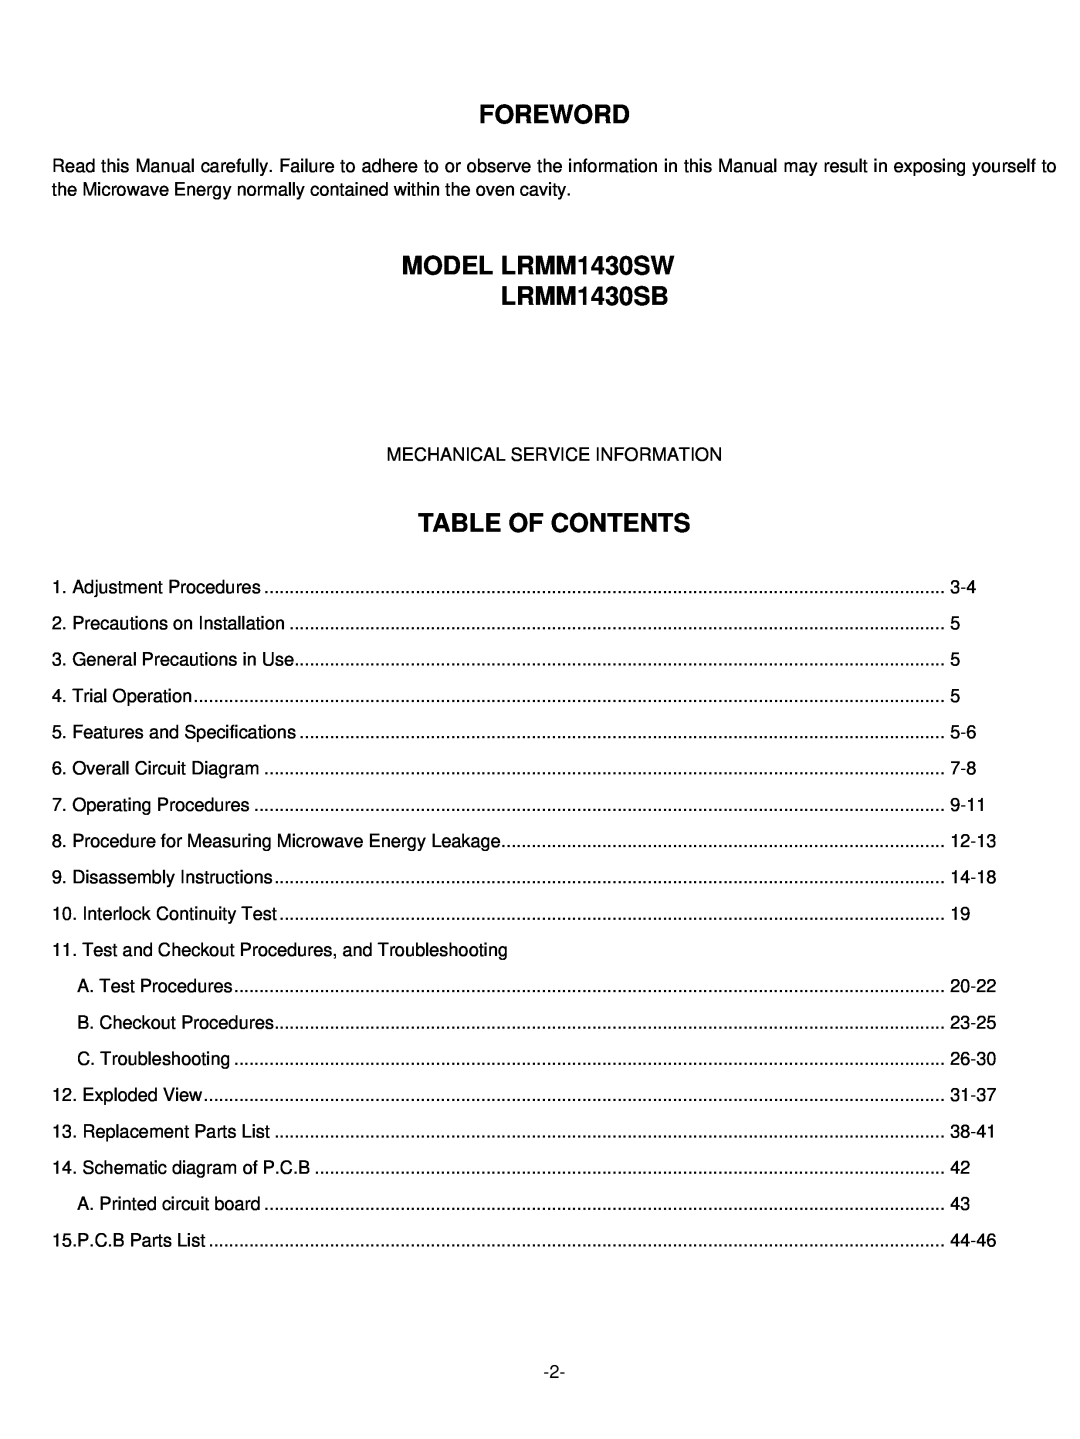 LG Electronics manual Foreword, MODEL LRMM1430SW LRMM1430SB, Table Of Contents 